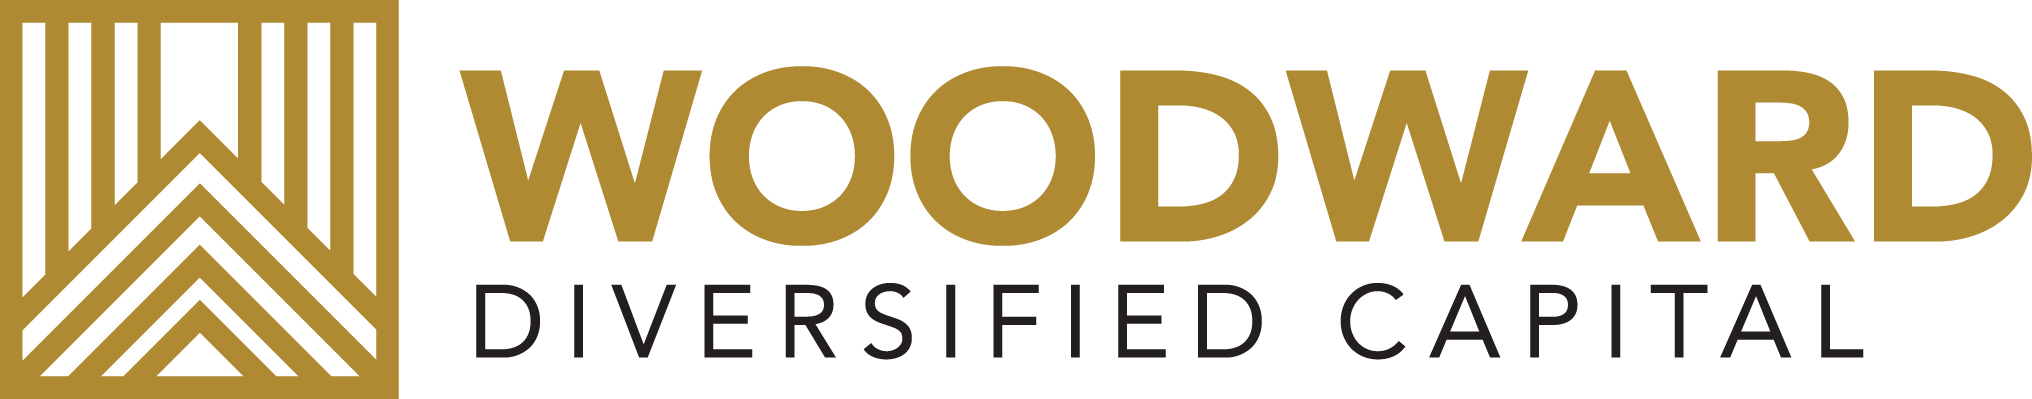 Woodward Diversified Capital